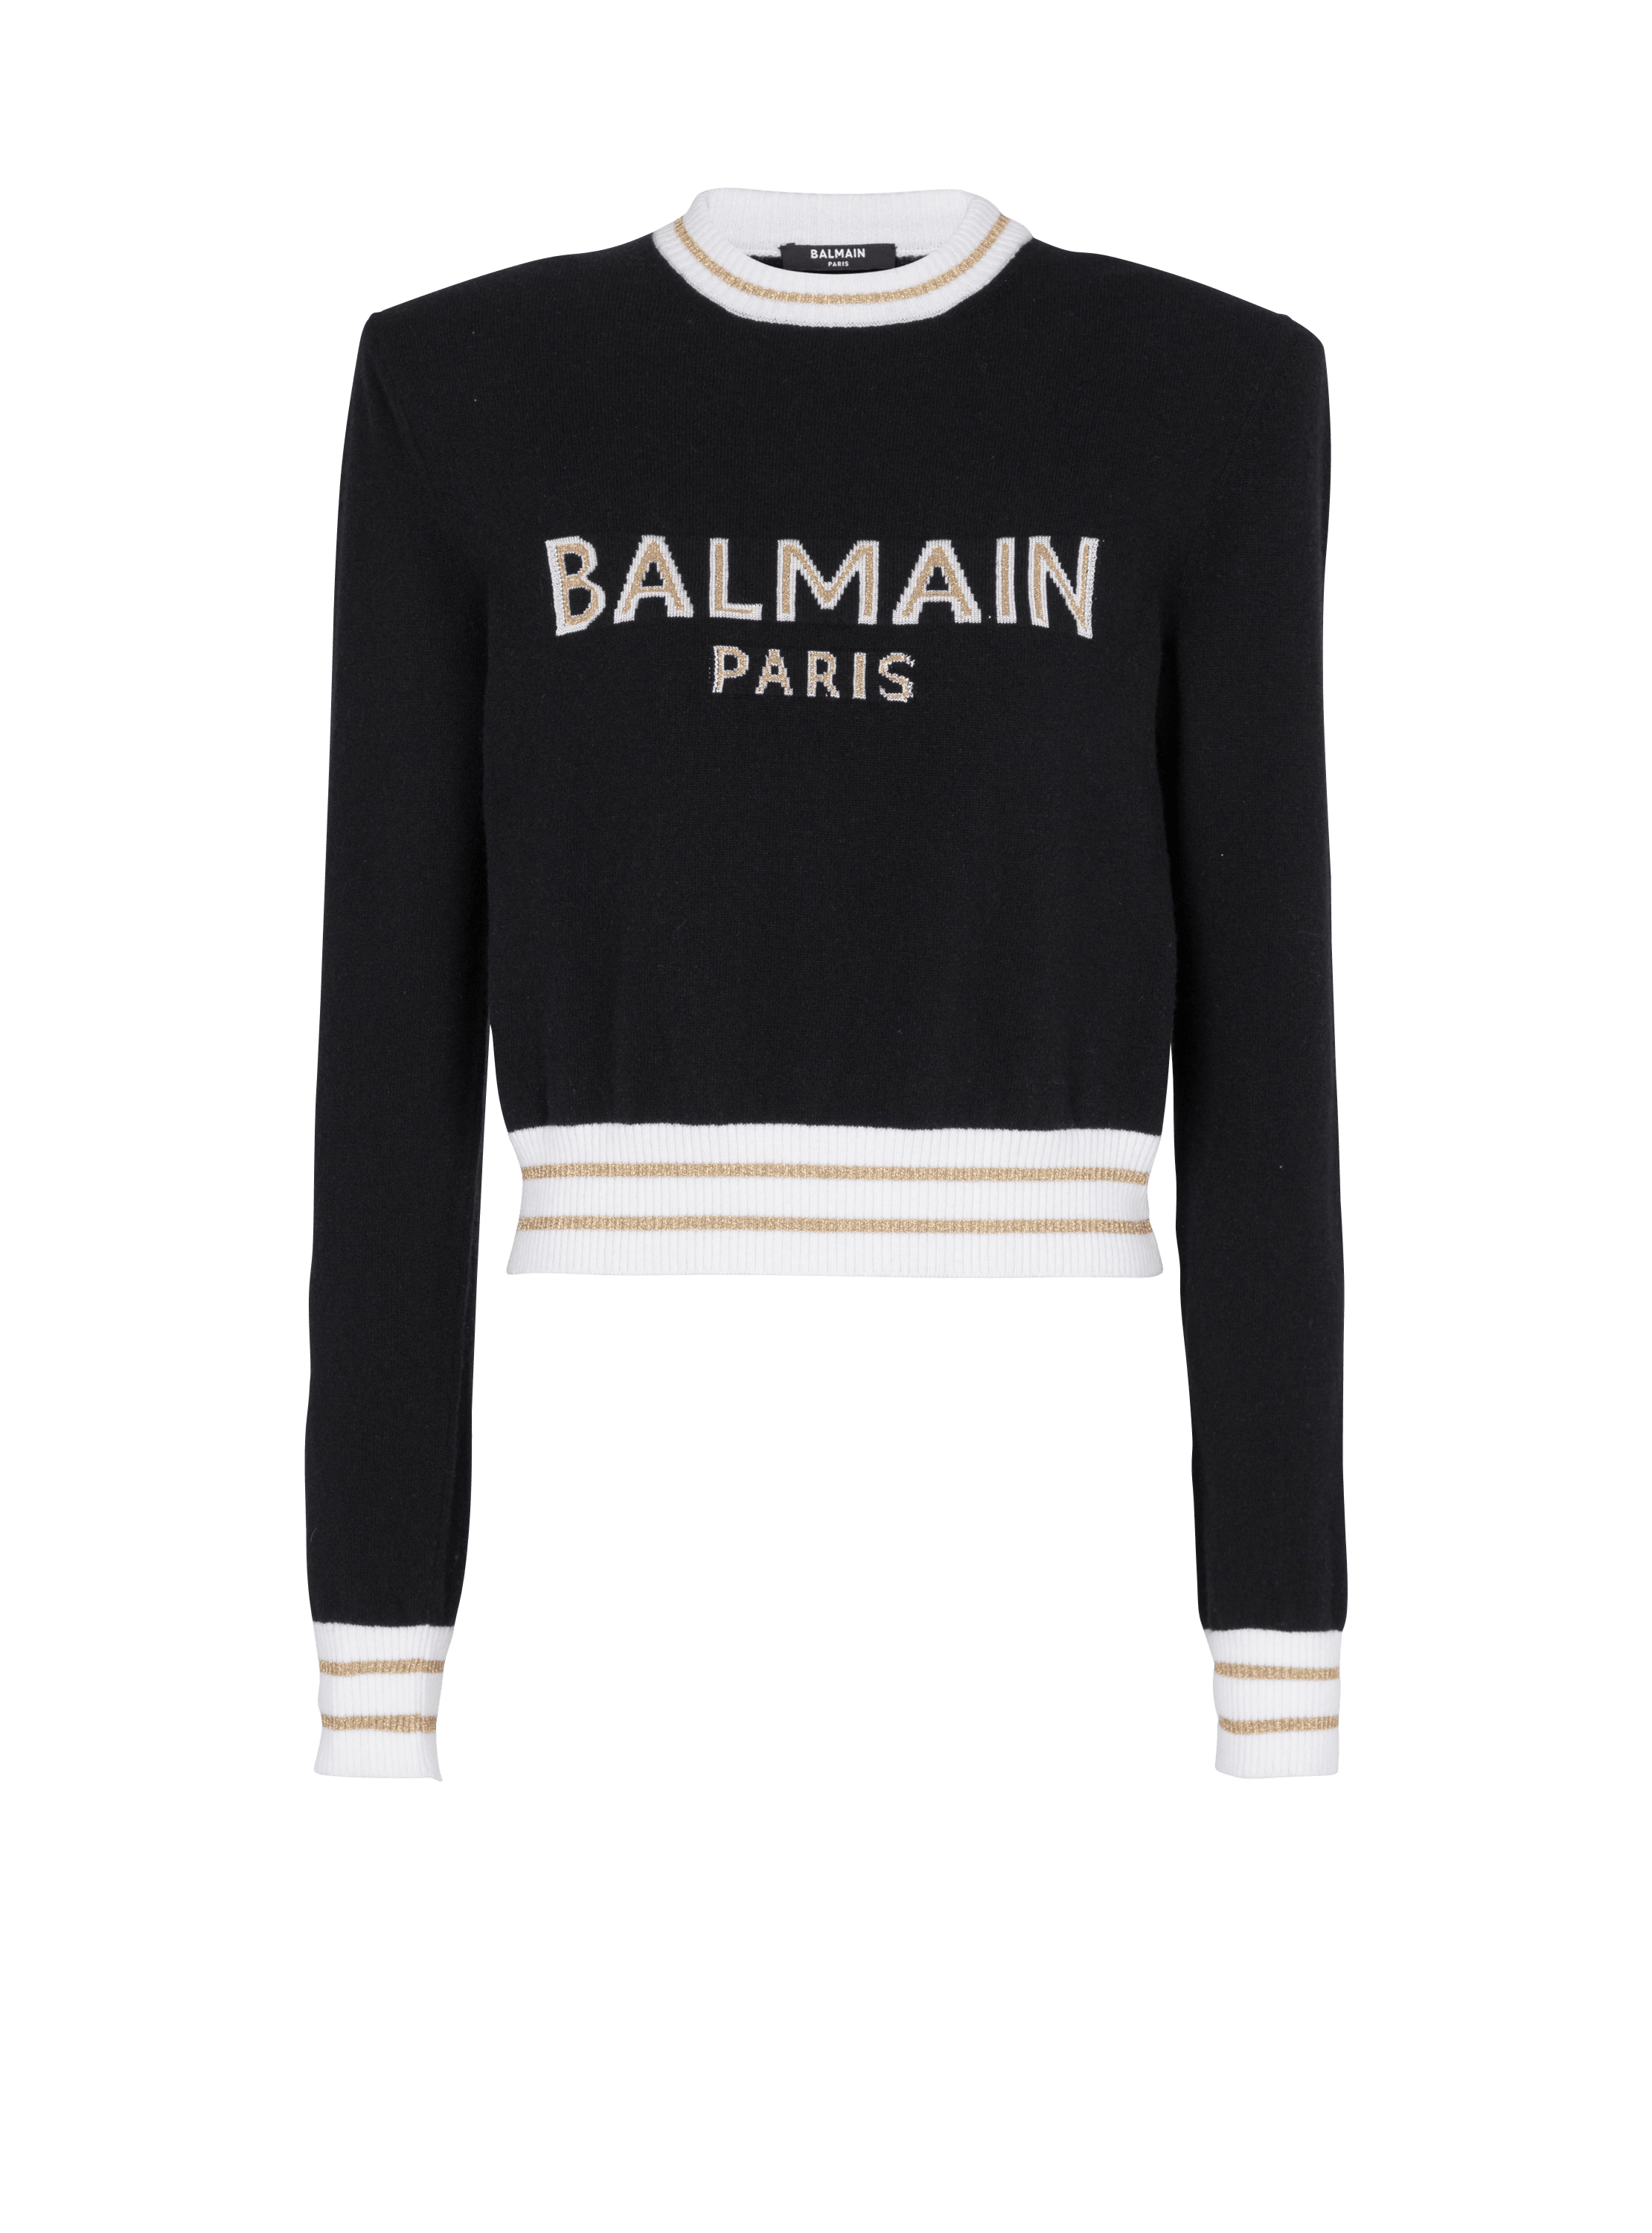 Kurzes Sweatshirt aus Wolle mit Balmain-Logo, schwarz, hi-res